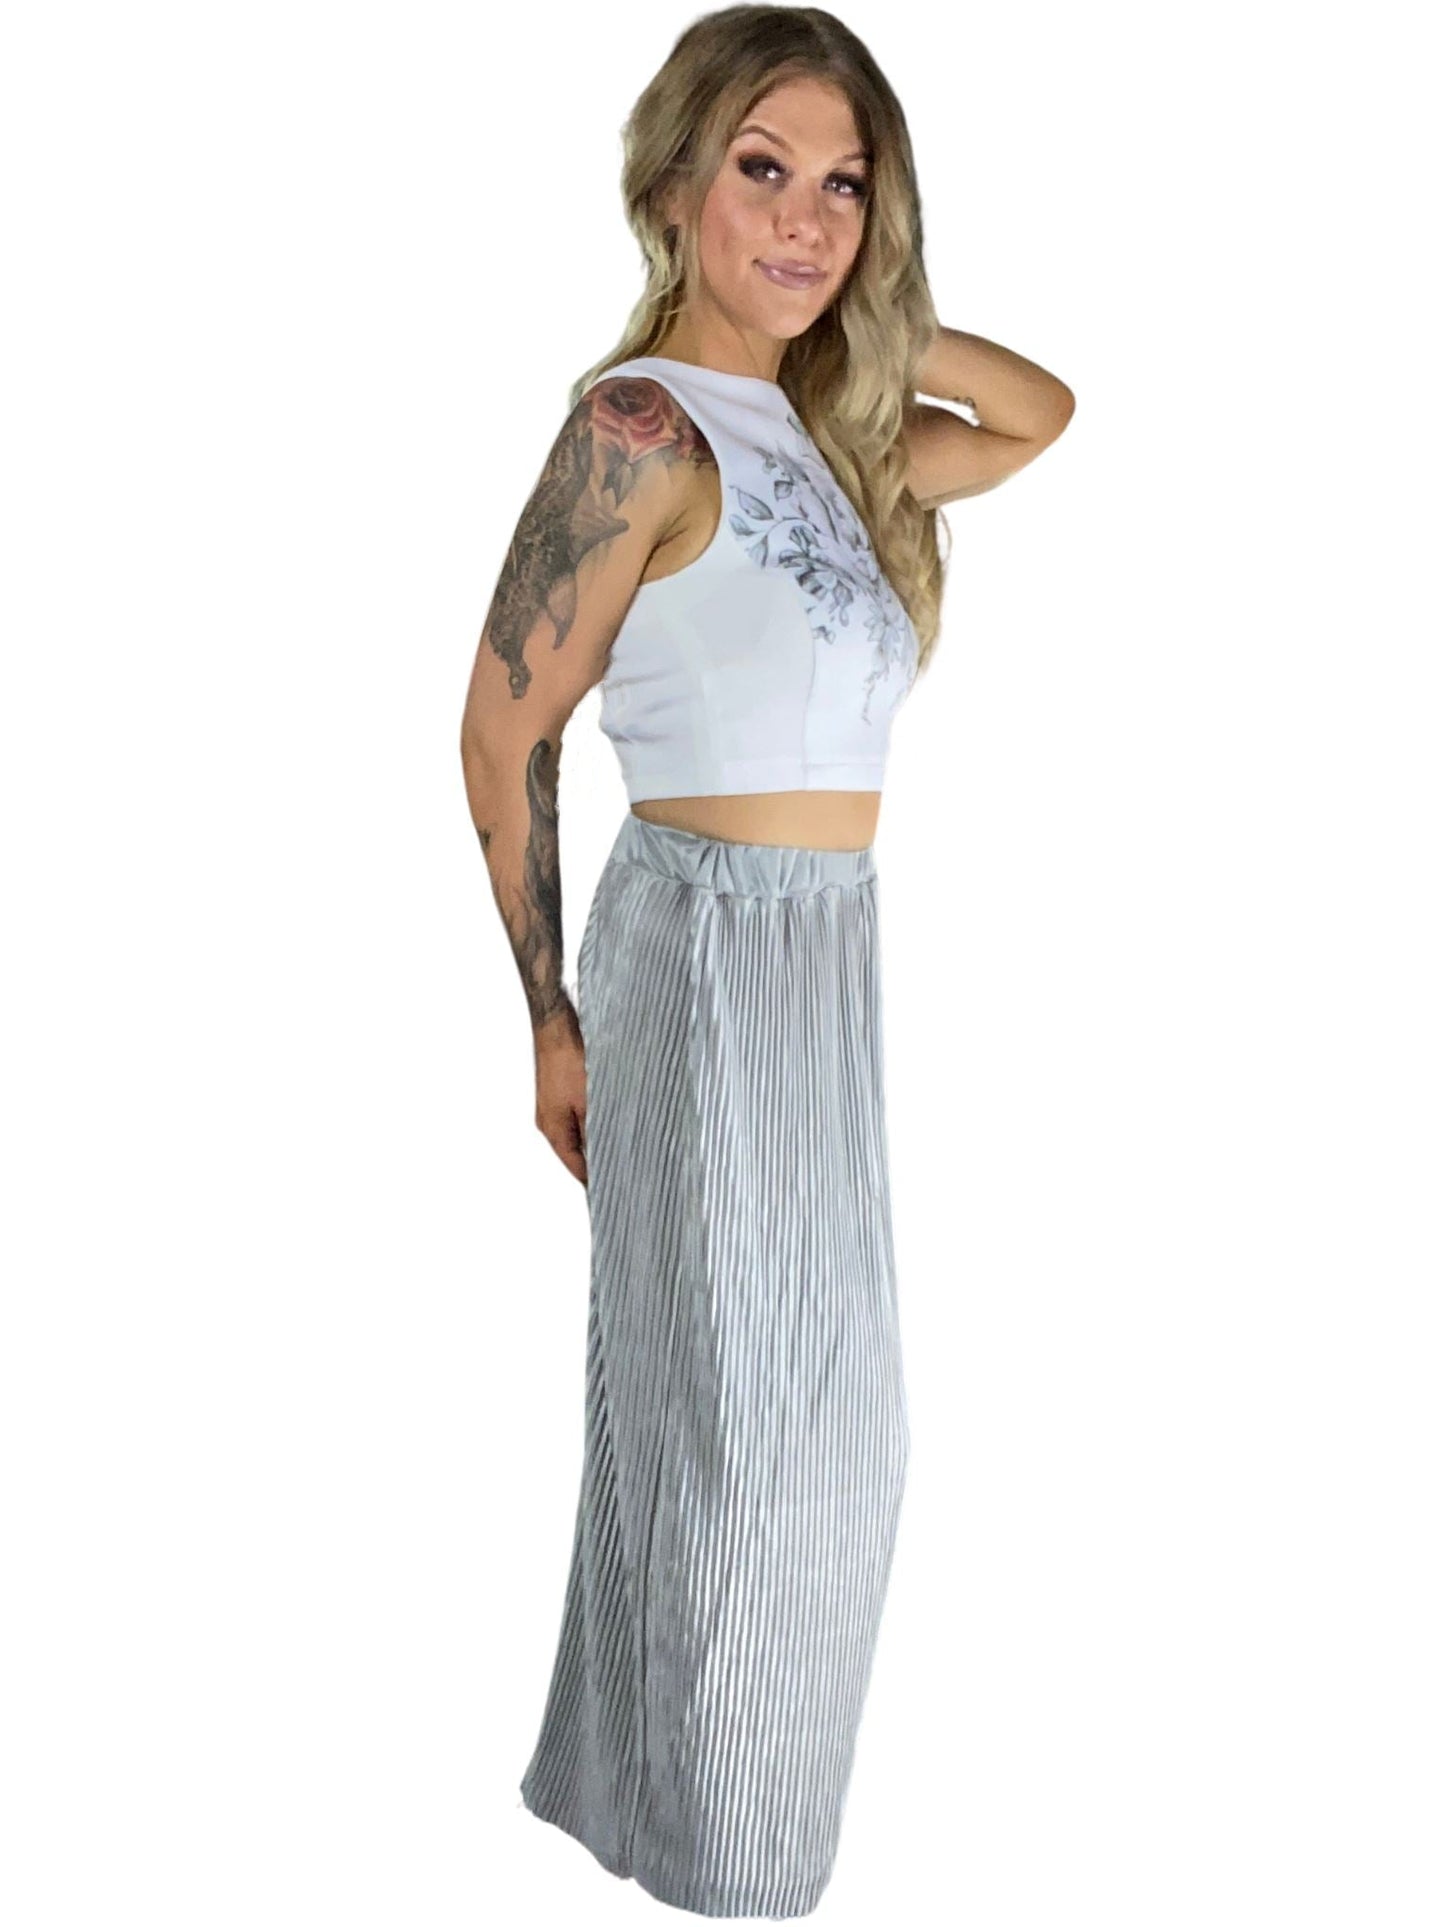 Metallic silver crease maxi skirt Skirts Aambers Goodies xx 